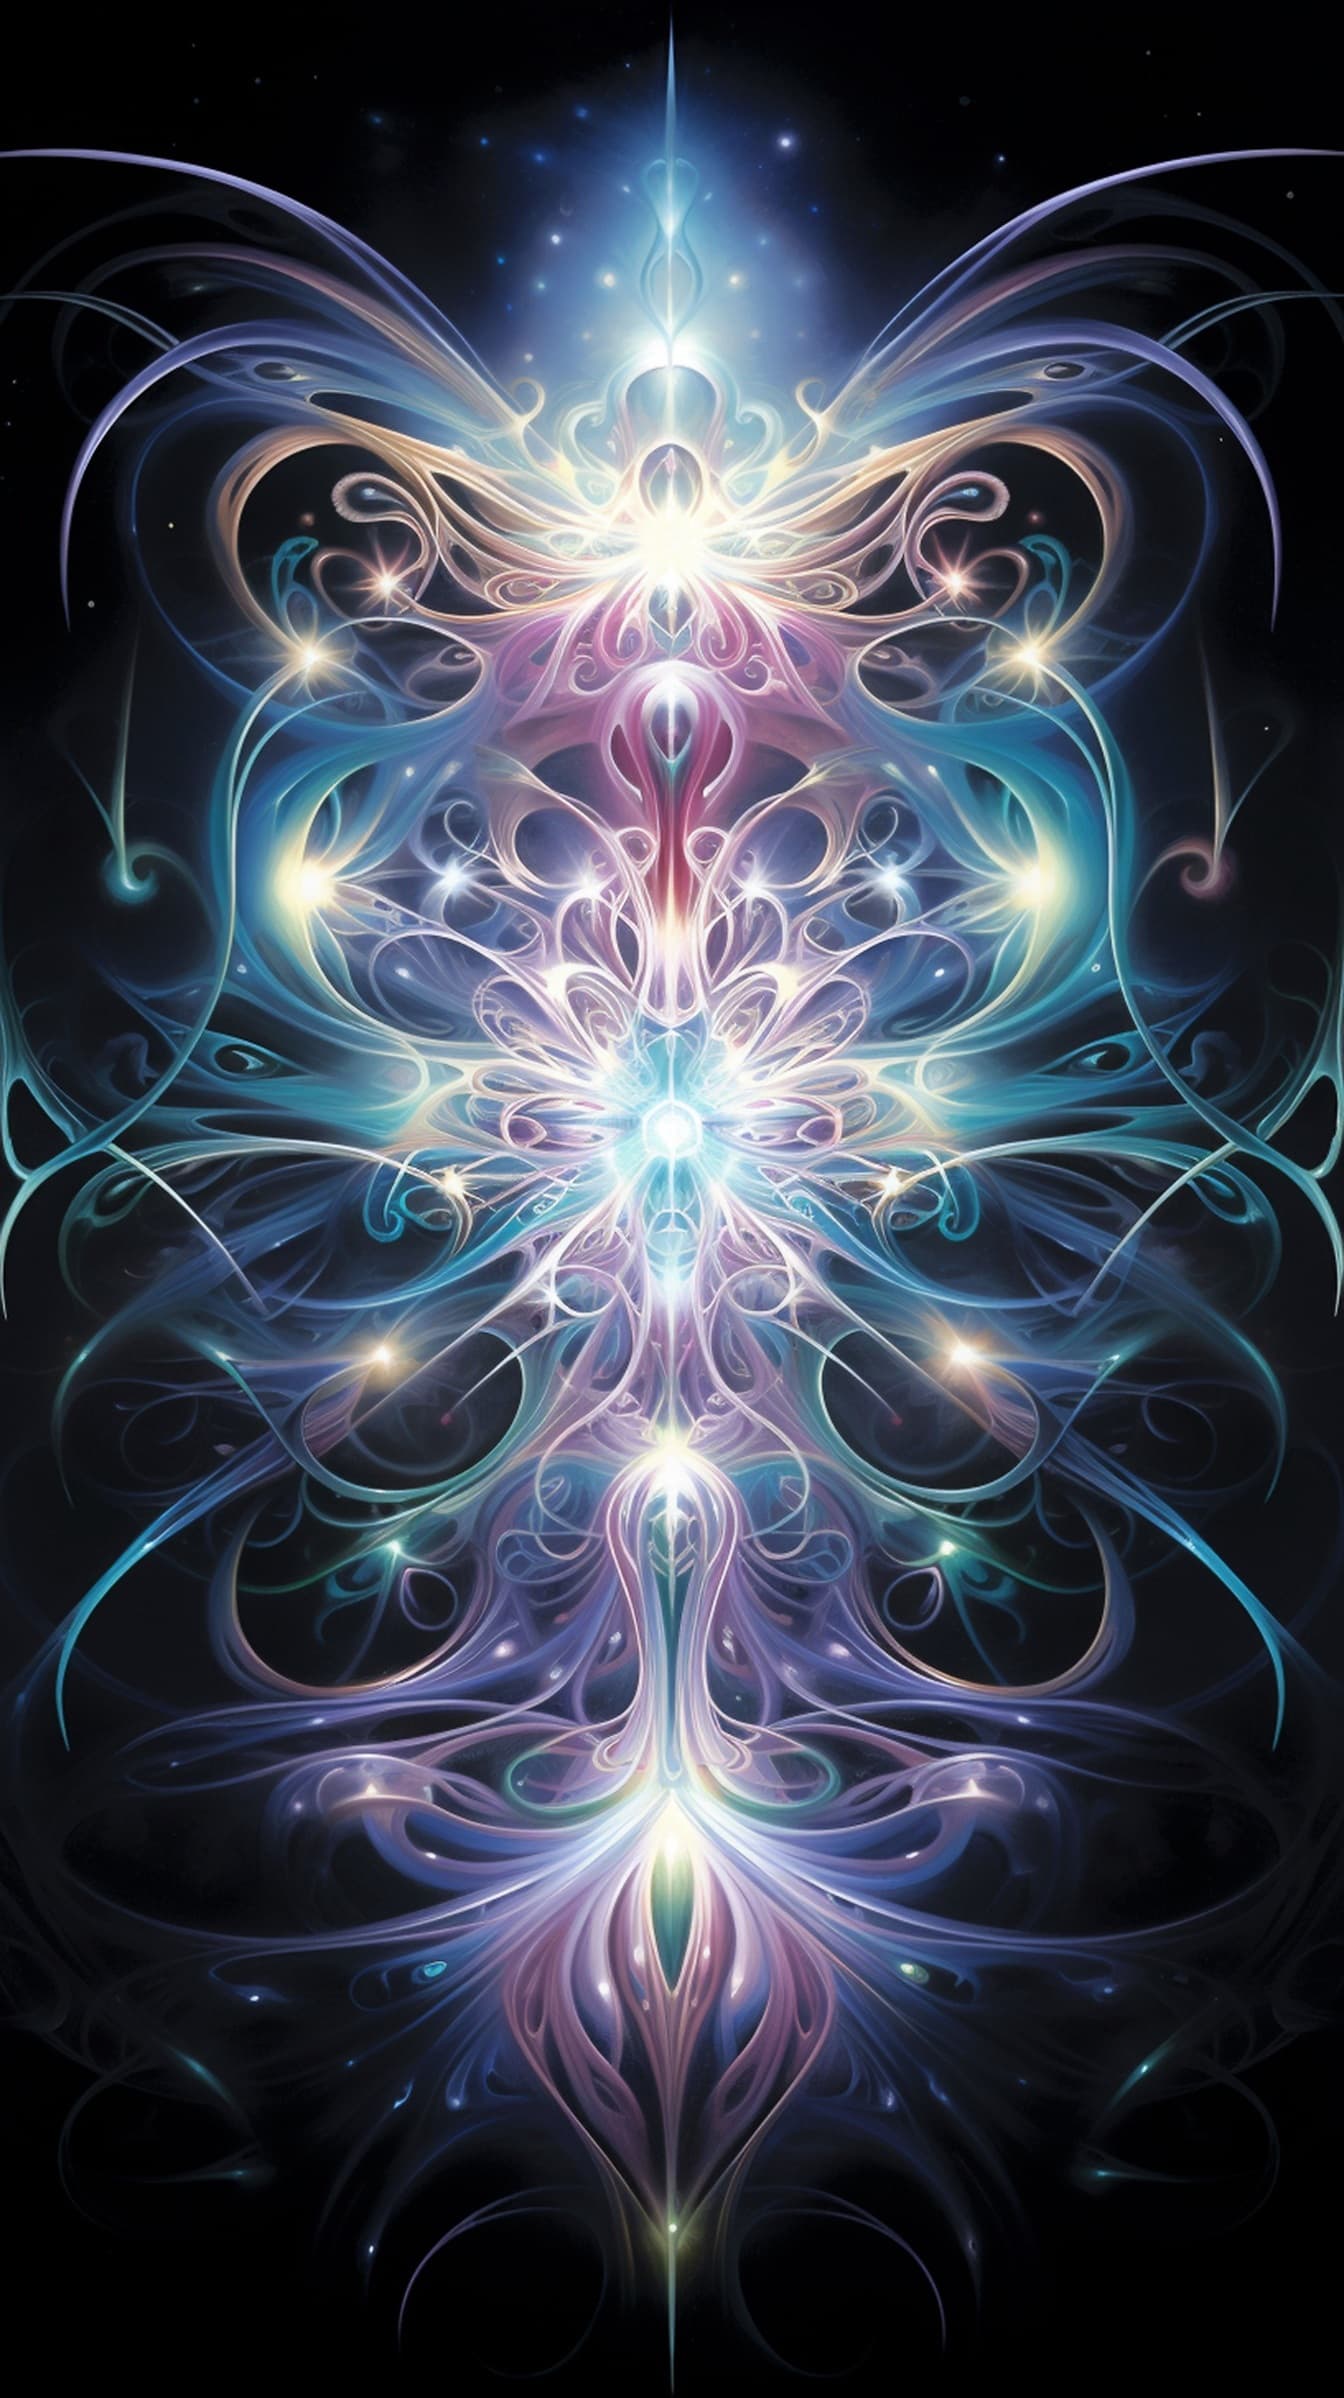 Fargerik majestetisk plasma energi symmetri grafikk